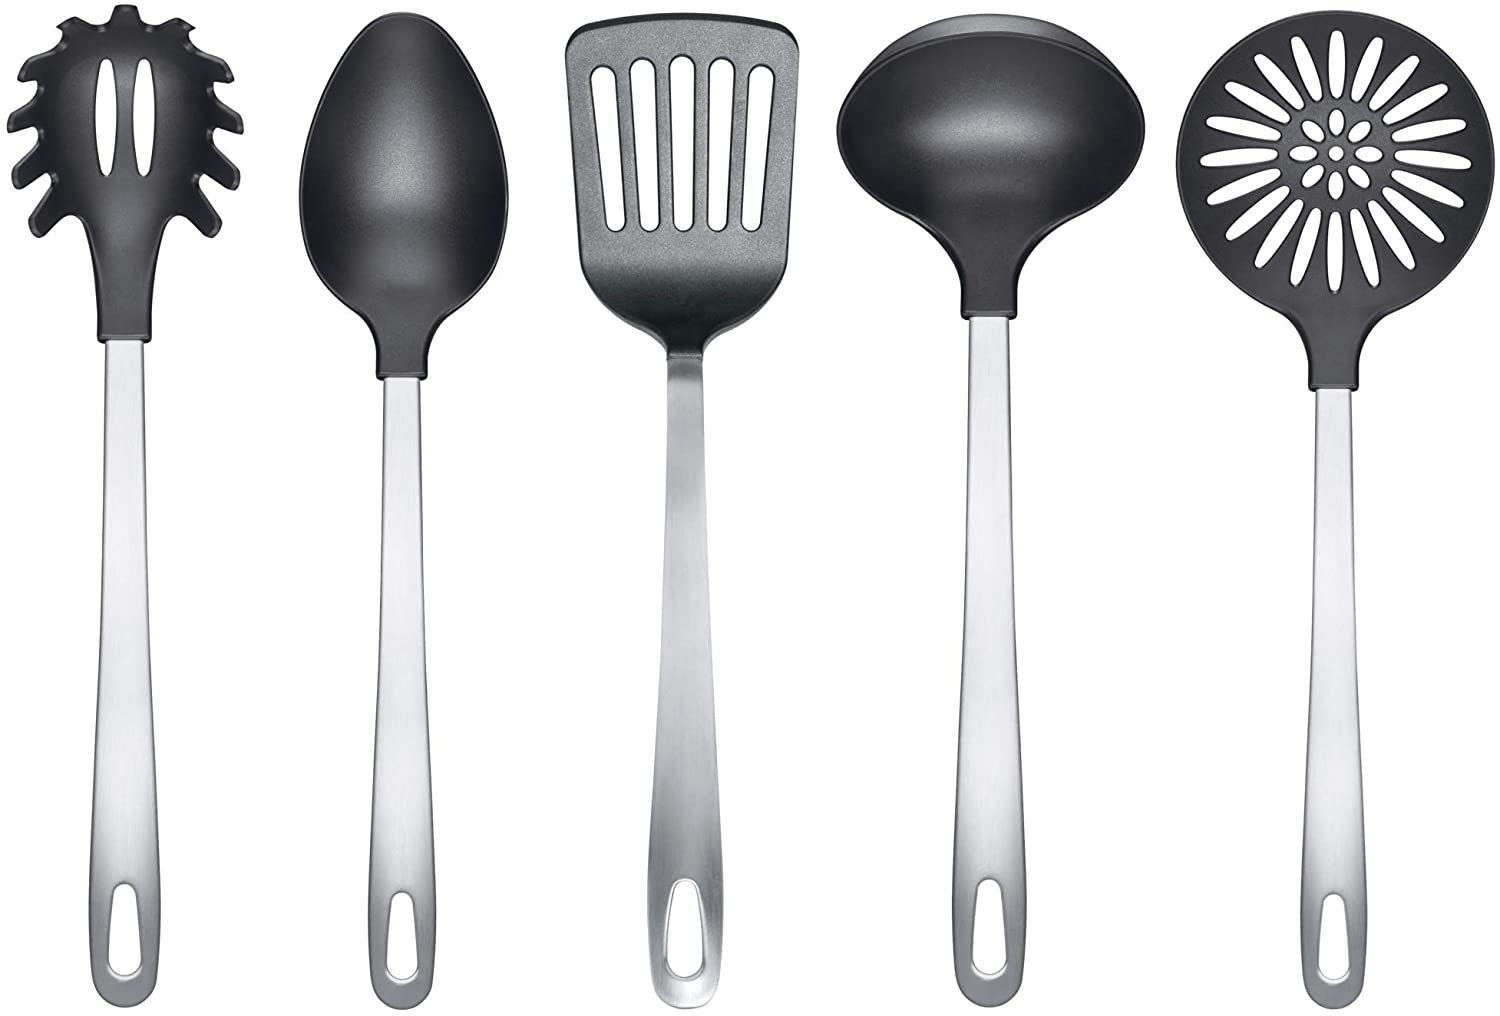 Silit 5-Piece Kitchen Utensil Set, 31 cm, Ladle, Slotted Spoon, Spatula, Pasta Spoon, Stainless Steel, Plastic, Dishwasher Safe